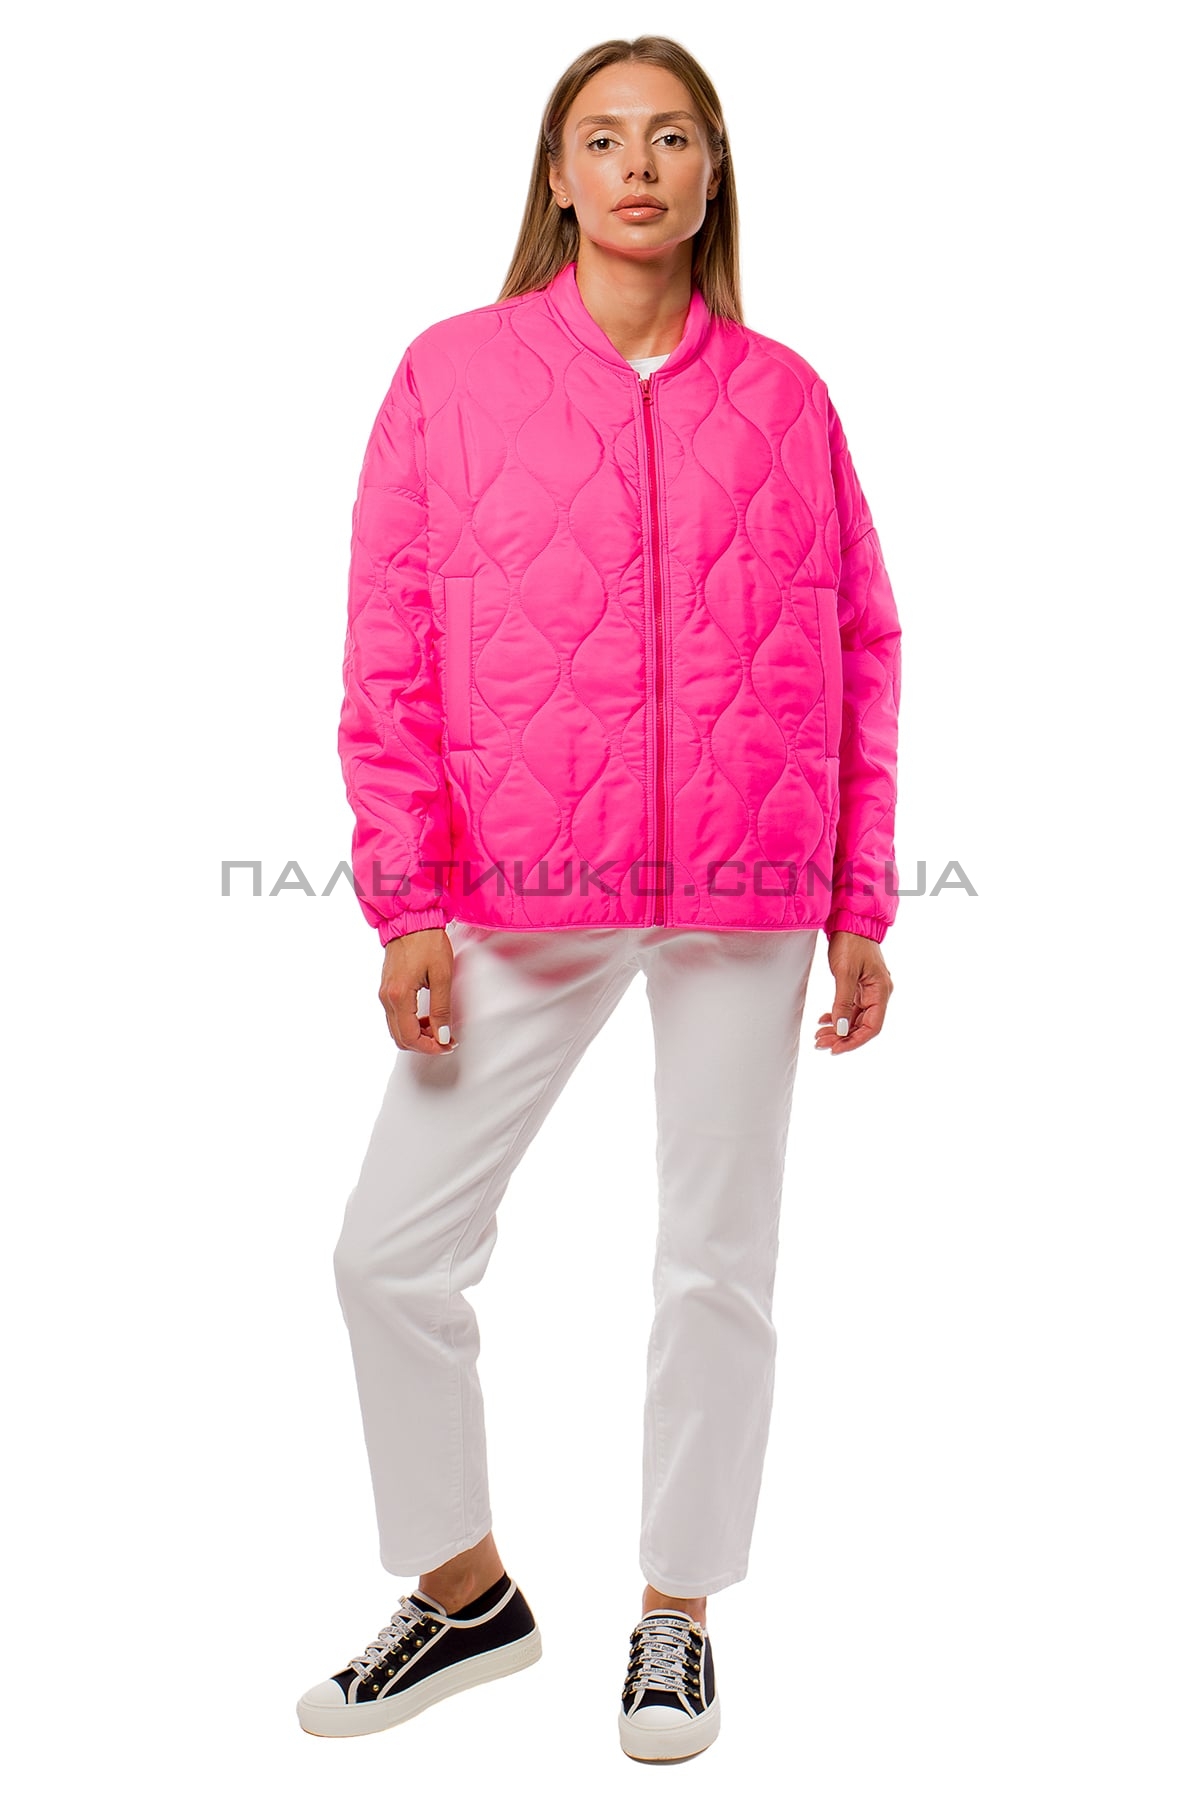  Женкская короткая куртка розовая